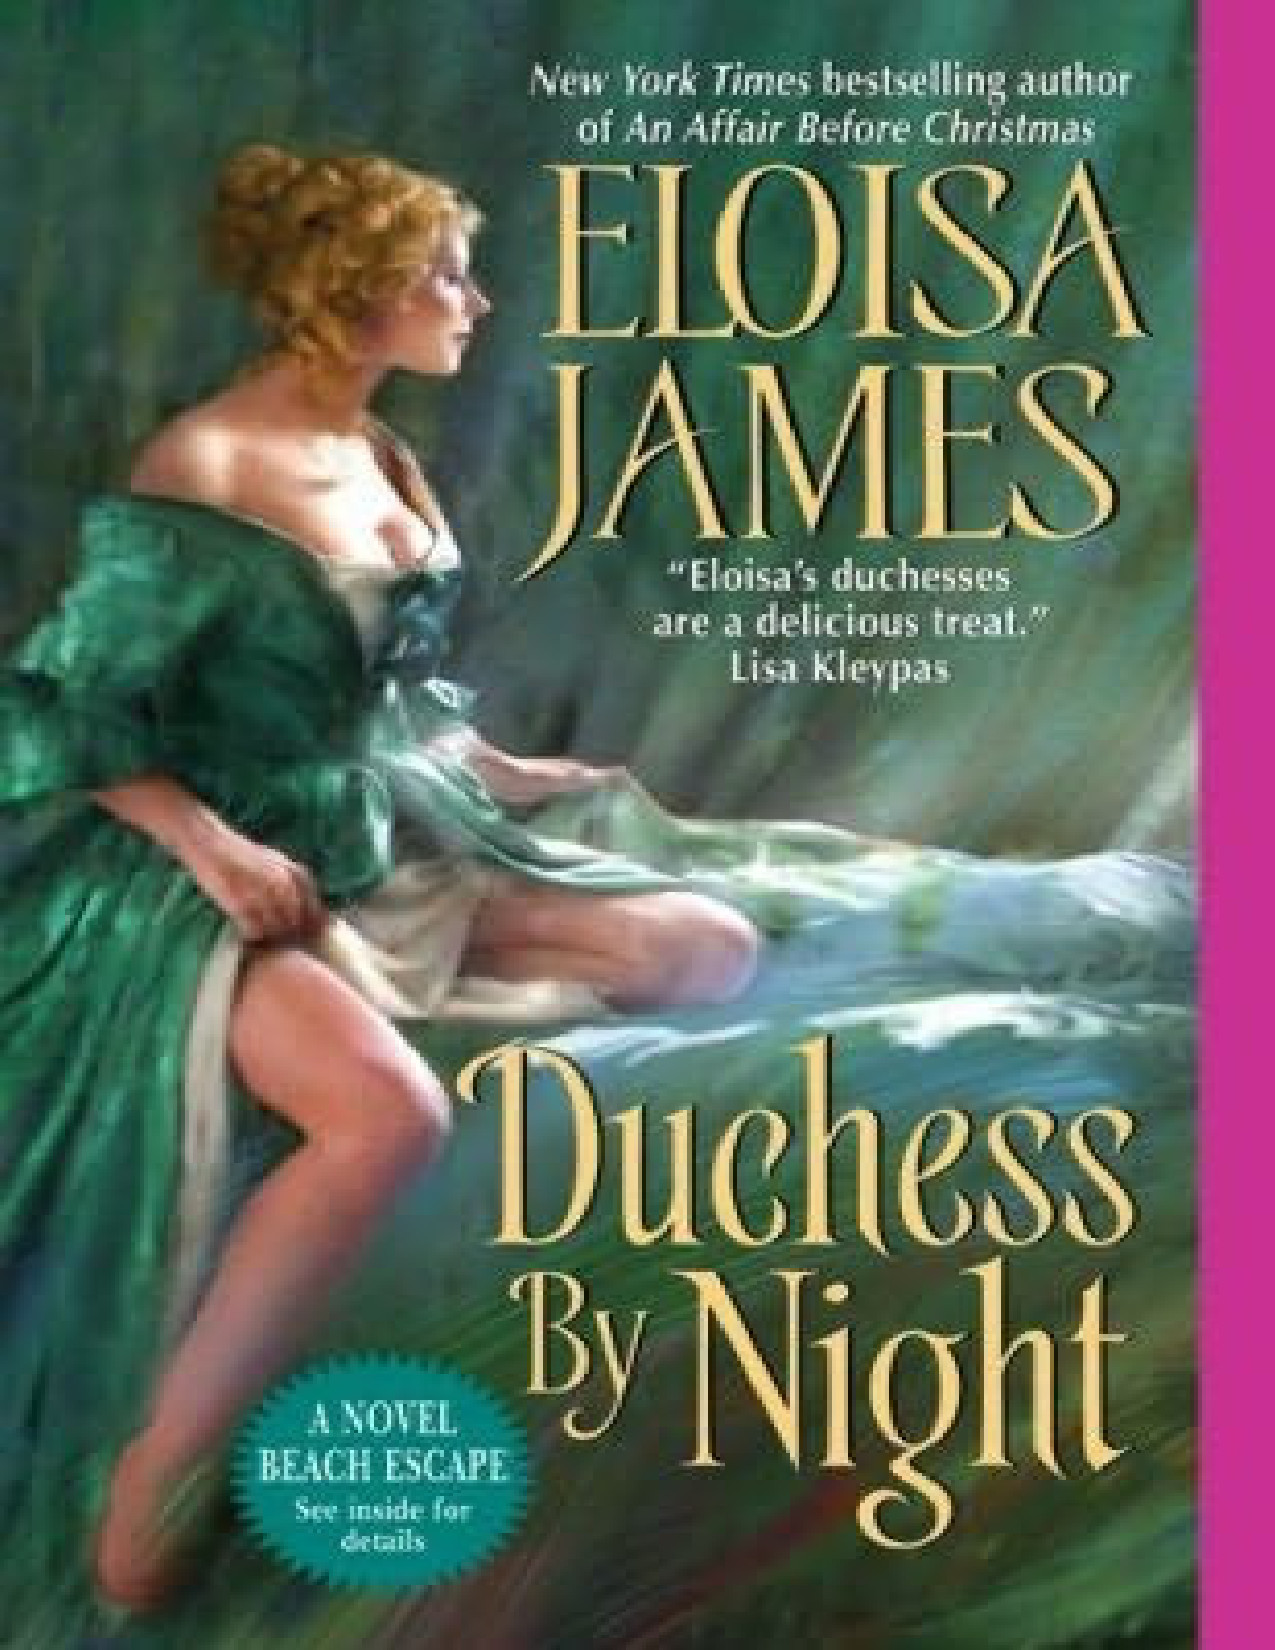 Eloisa James - Duchess by Night by Duchess By Night